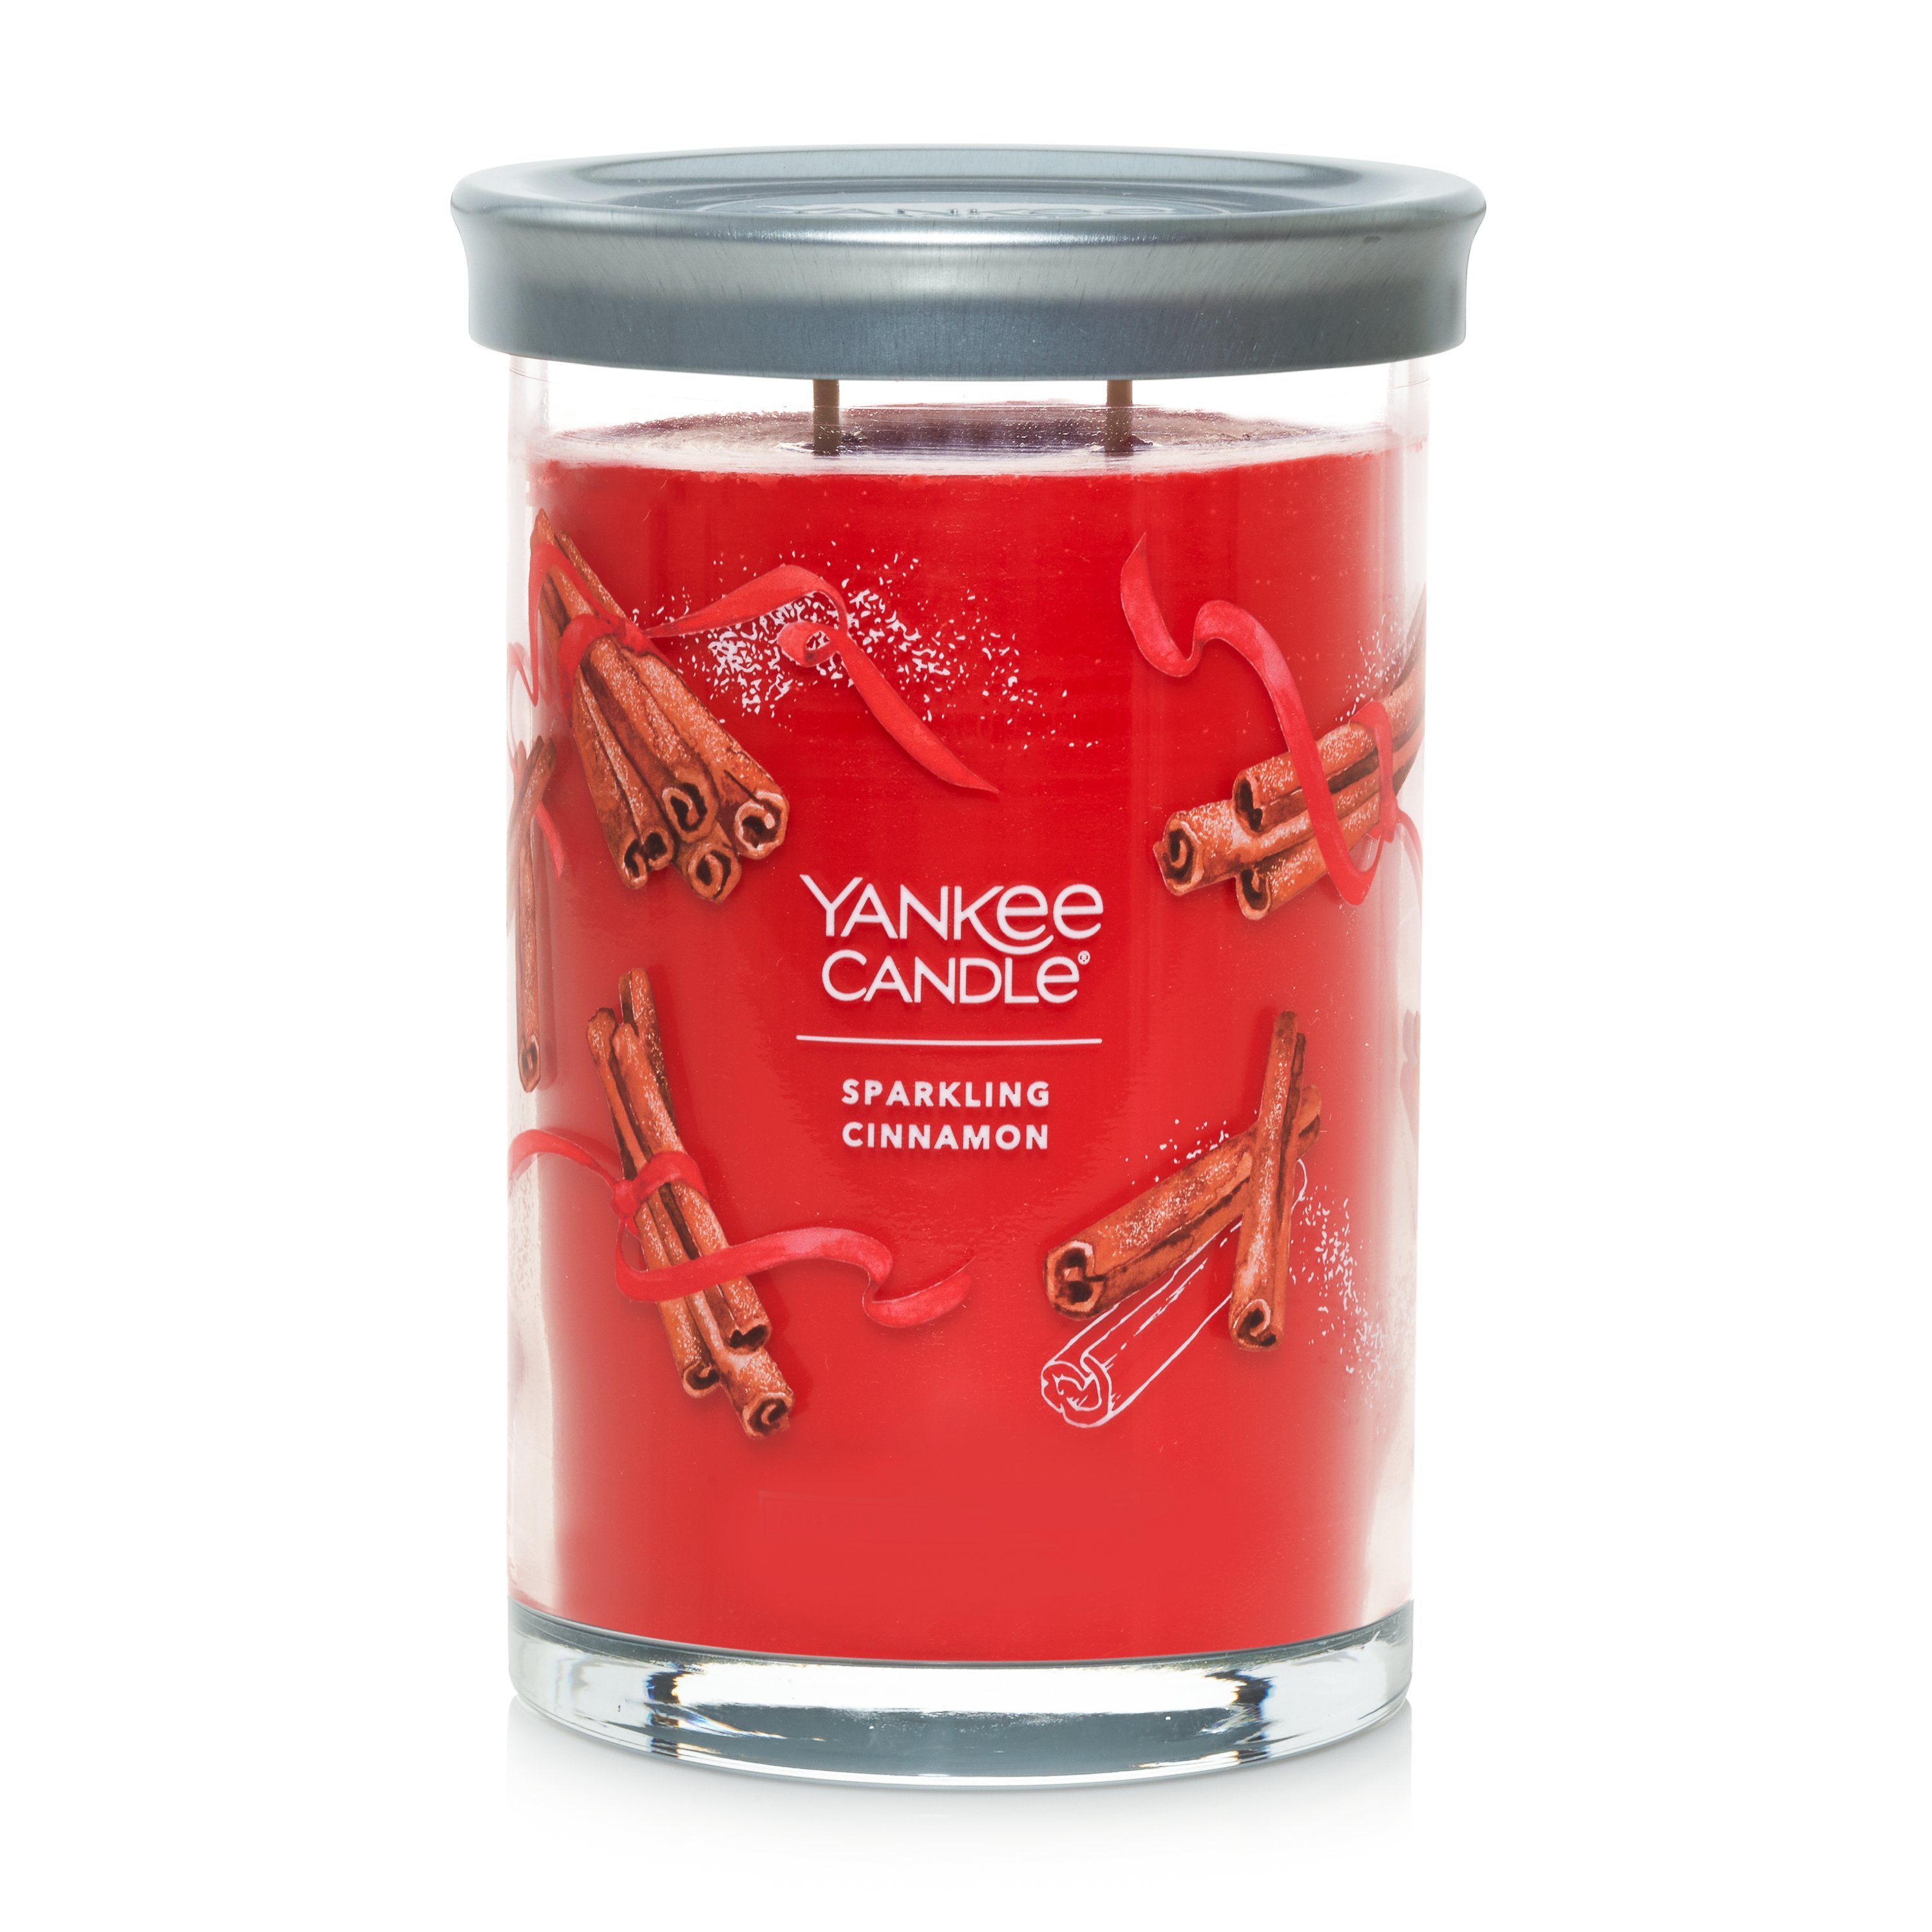 Cinnamon Stick 22 oz. Original Large Jar Candles - Large Jar Candles